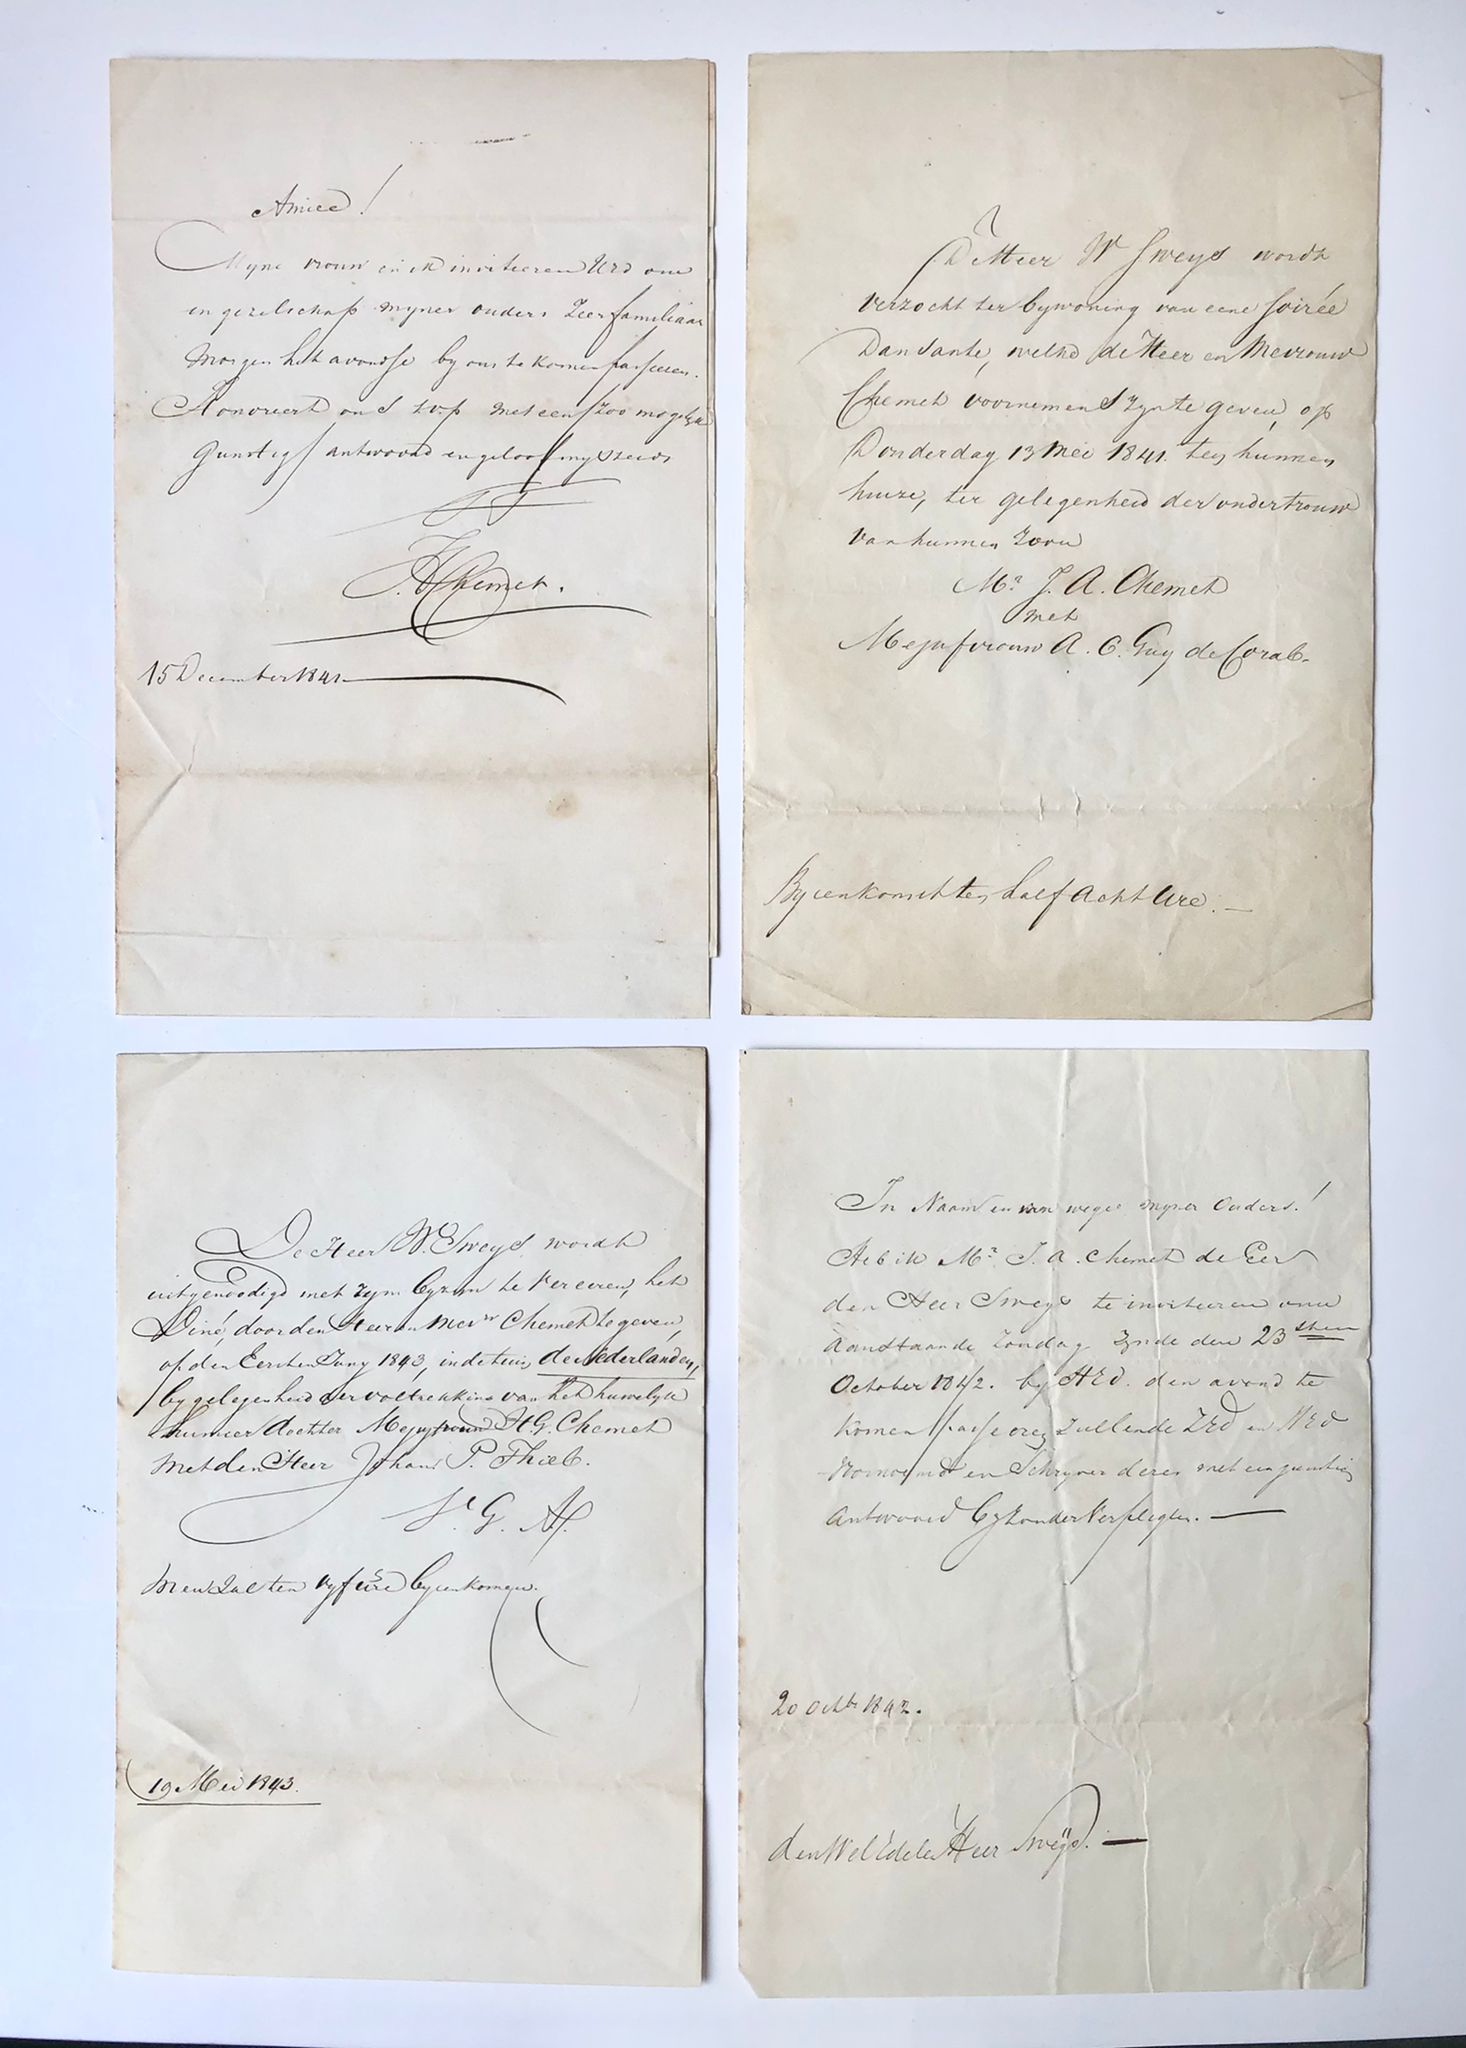  - [Manuscript 1843] Vier briefjes van Mr. J.A. Chemet, 1841-1843, aan W. Sweijs.